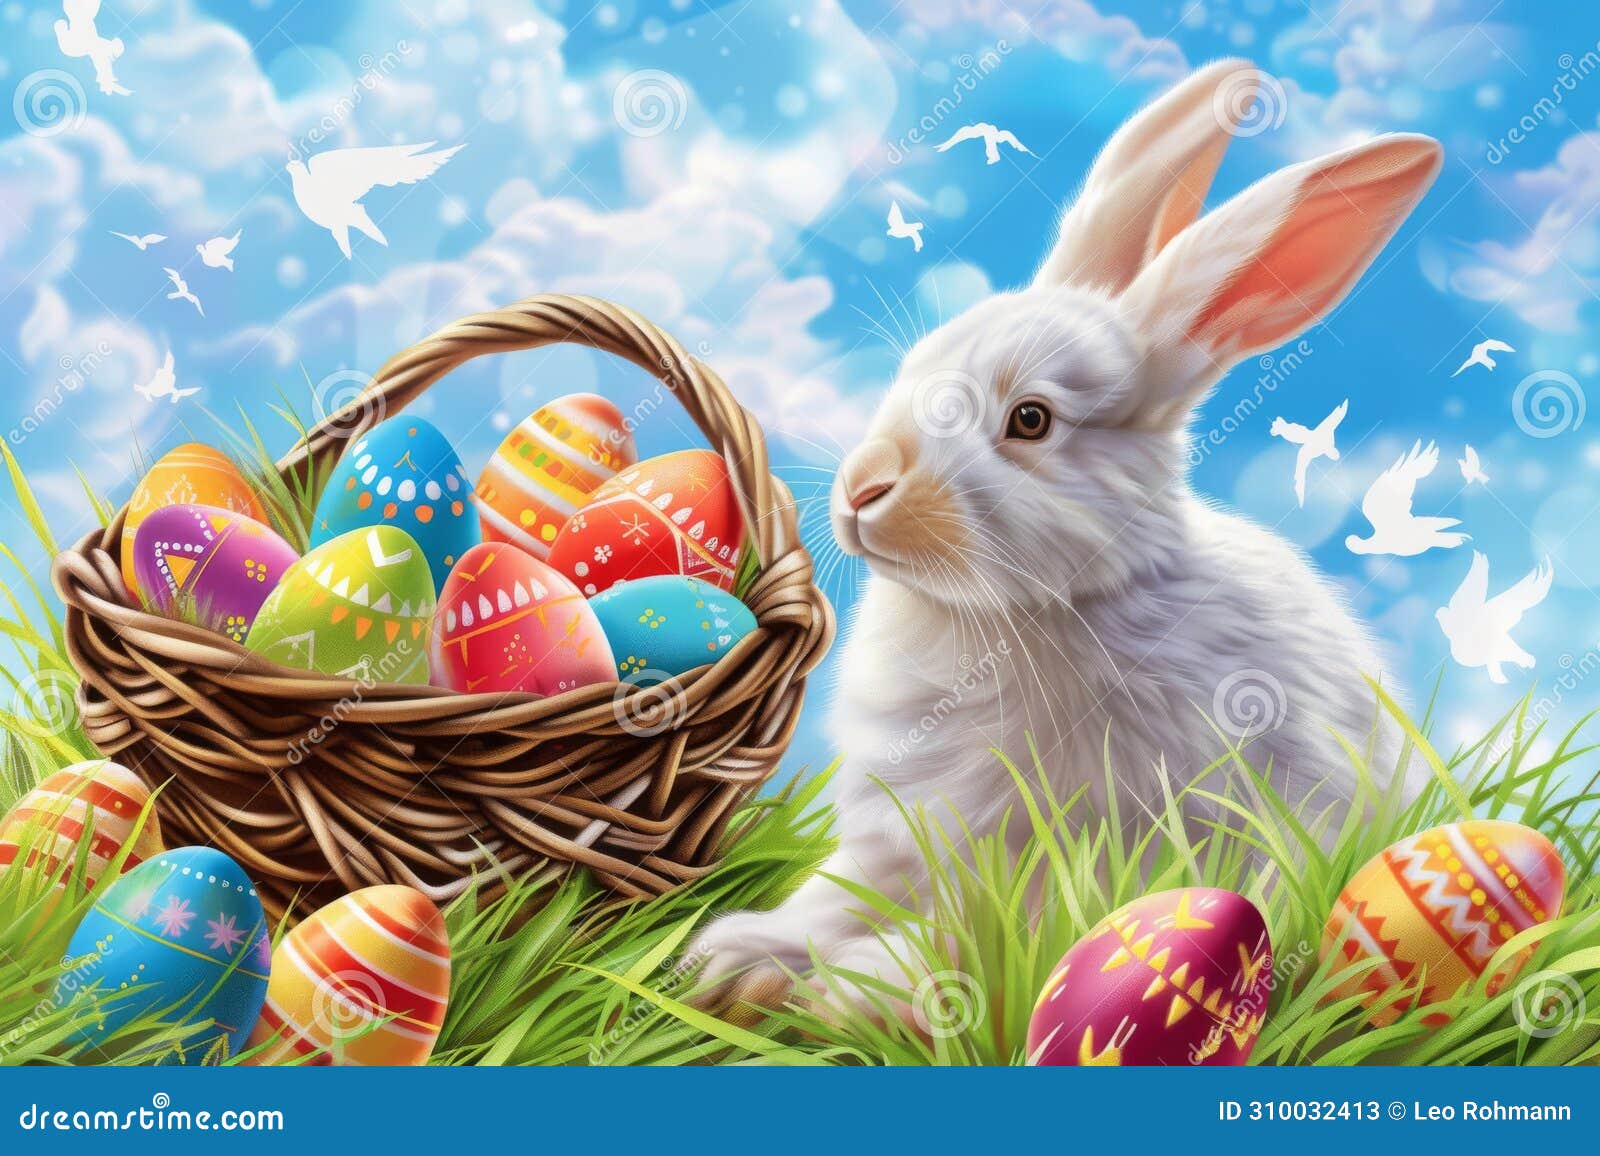 happy easter heartwarming eggs treats basket. white eastertide bunny decoration. unique message background wallpaper